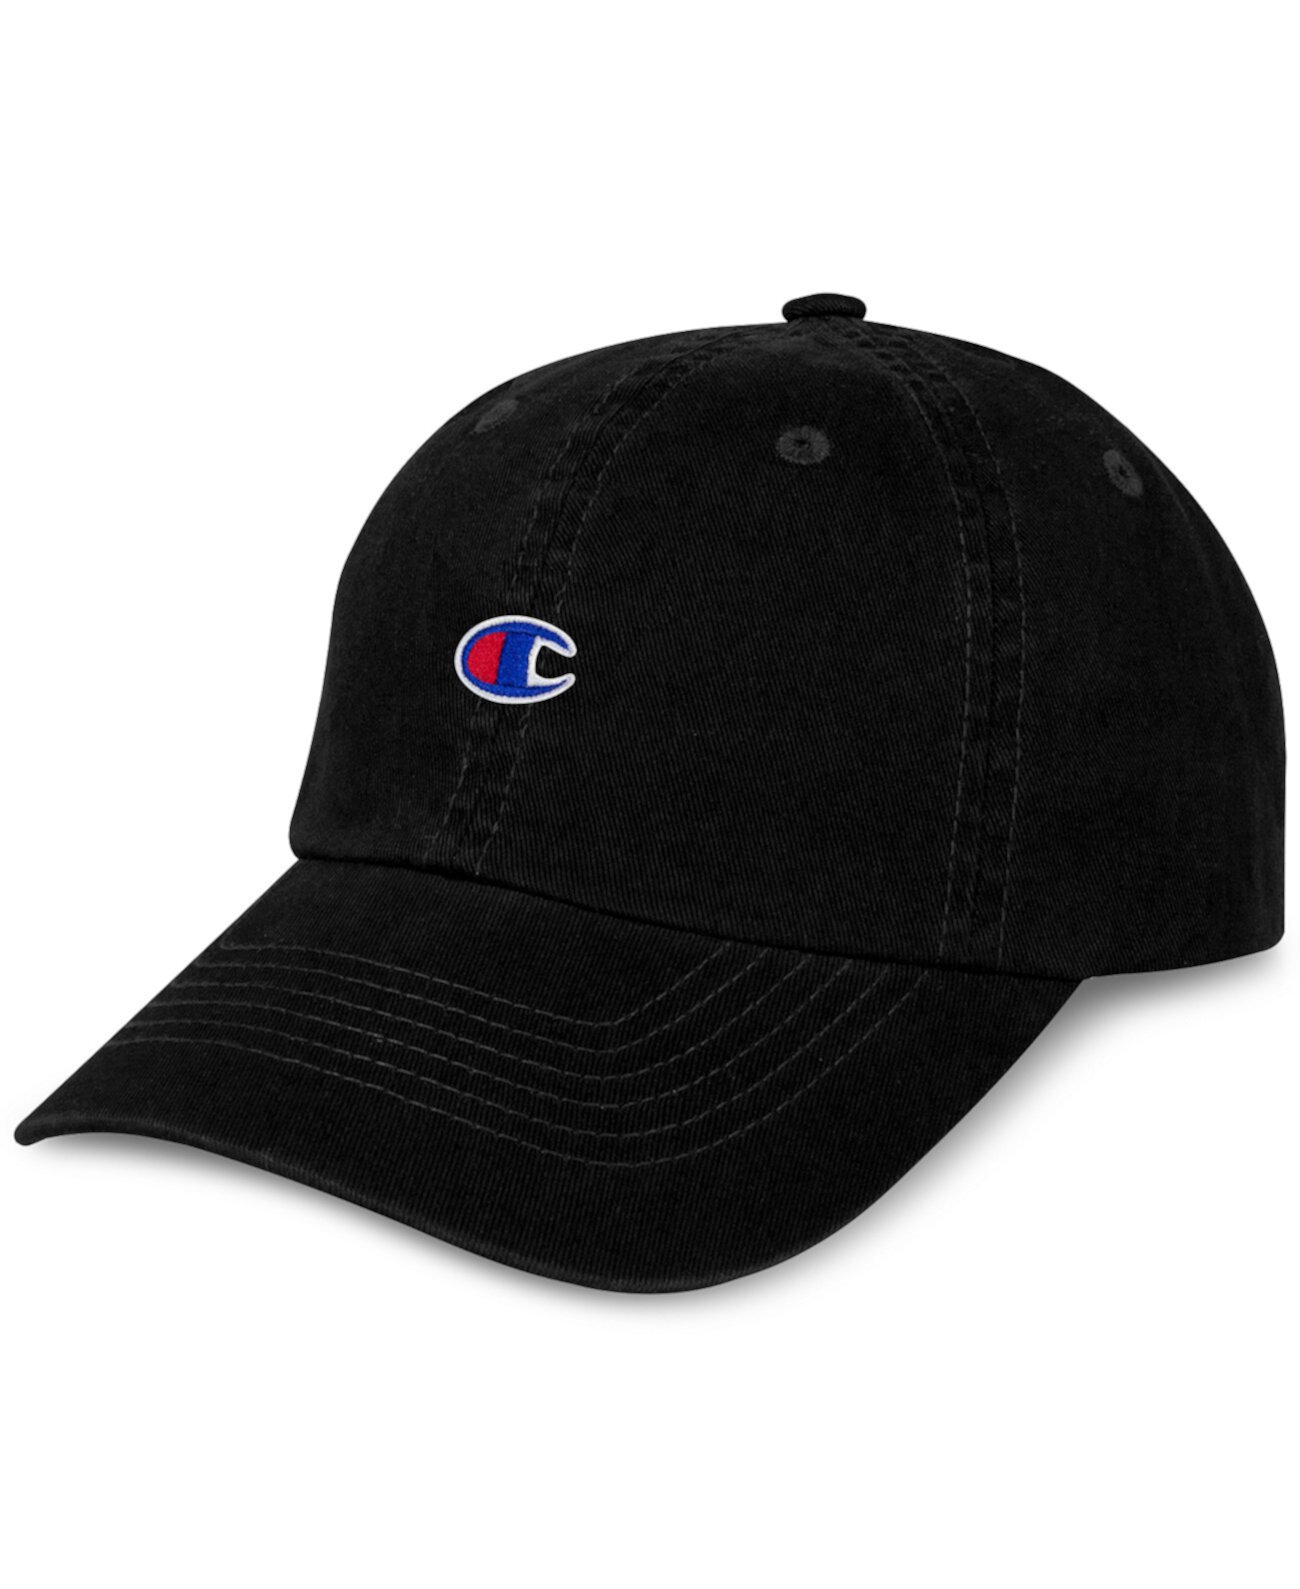 Мужская шляпа с логотипом Champion